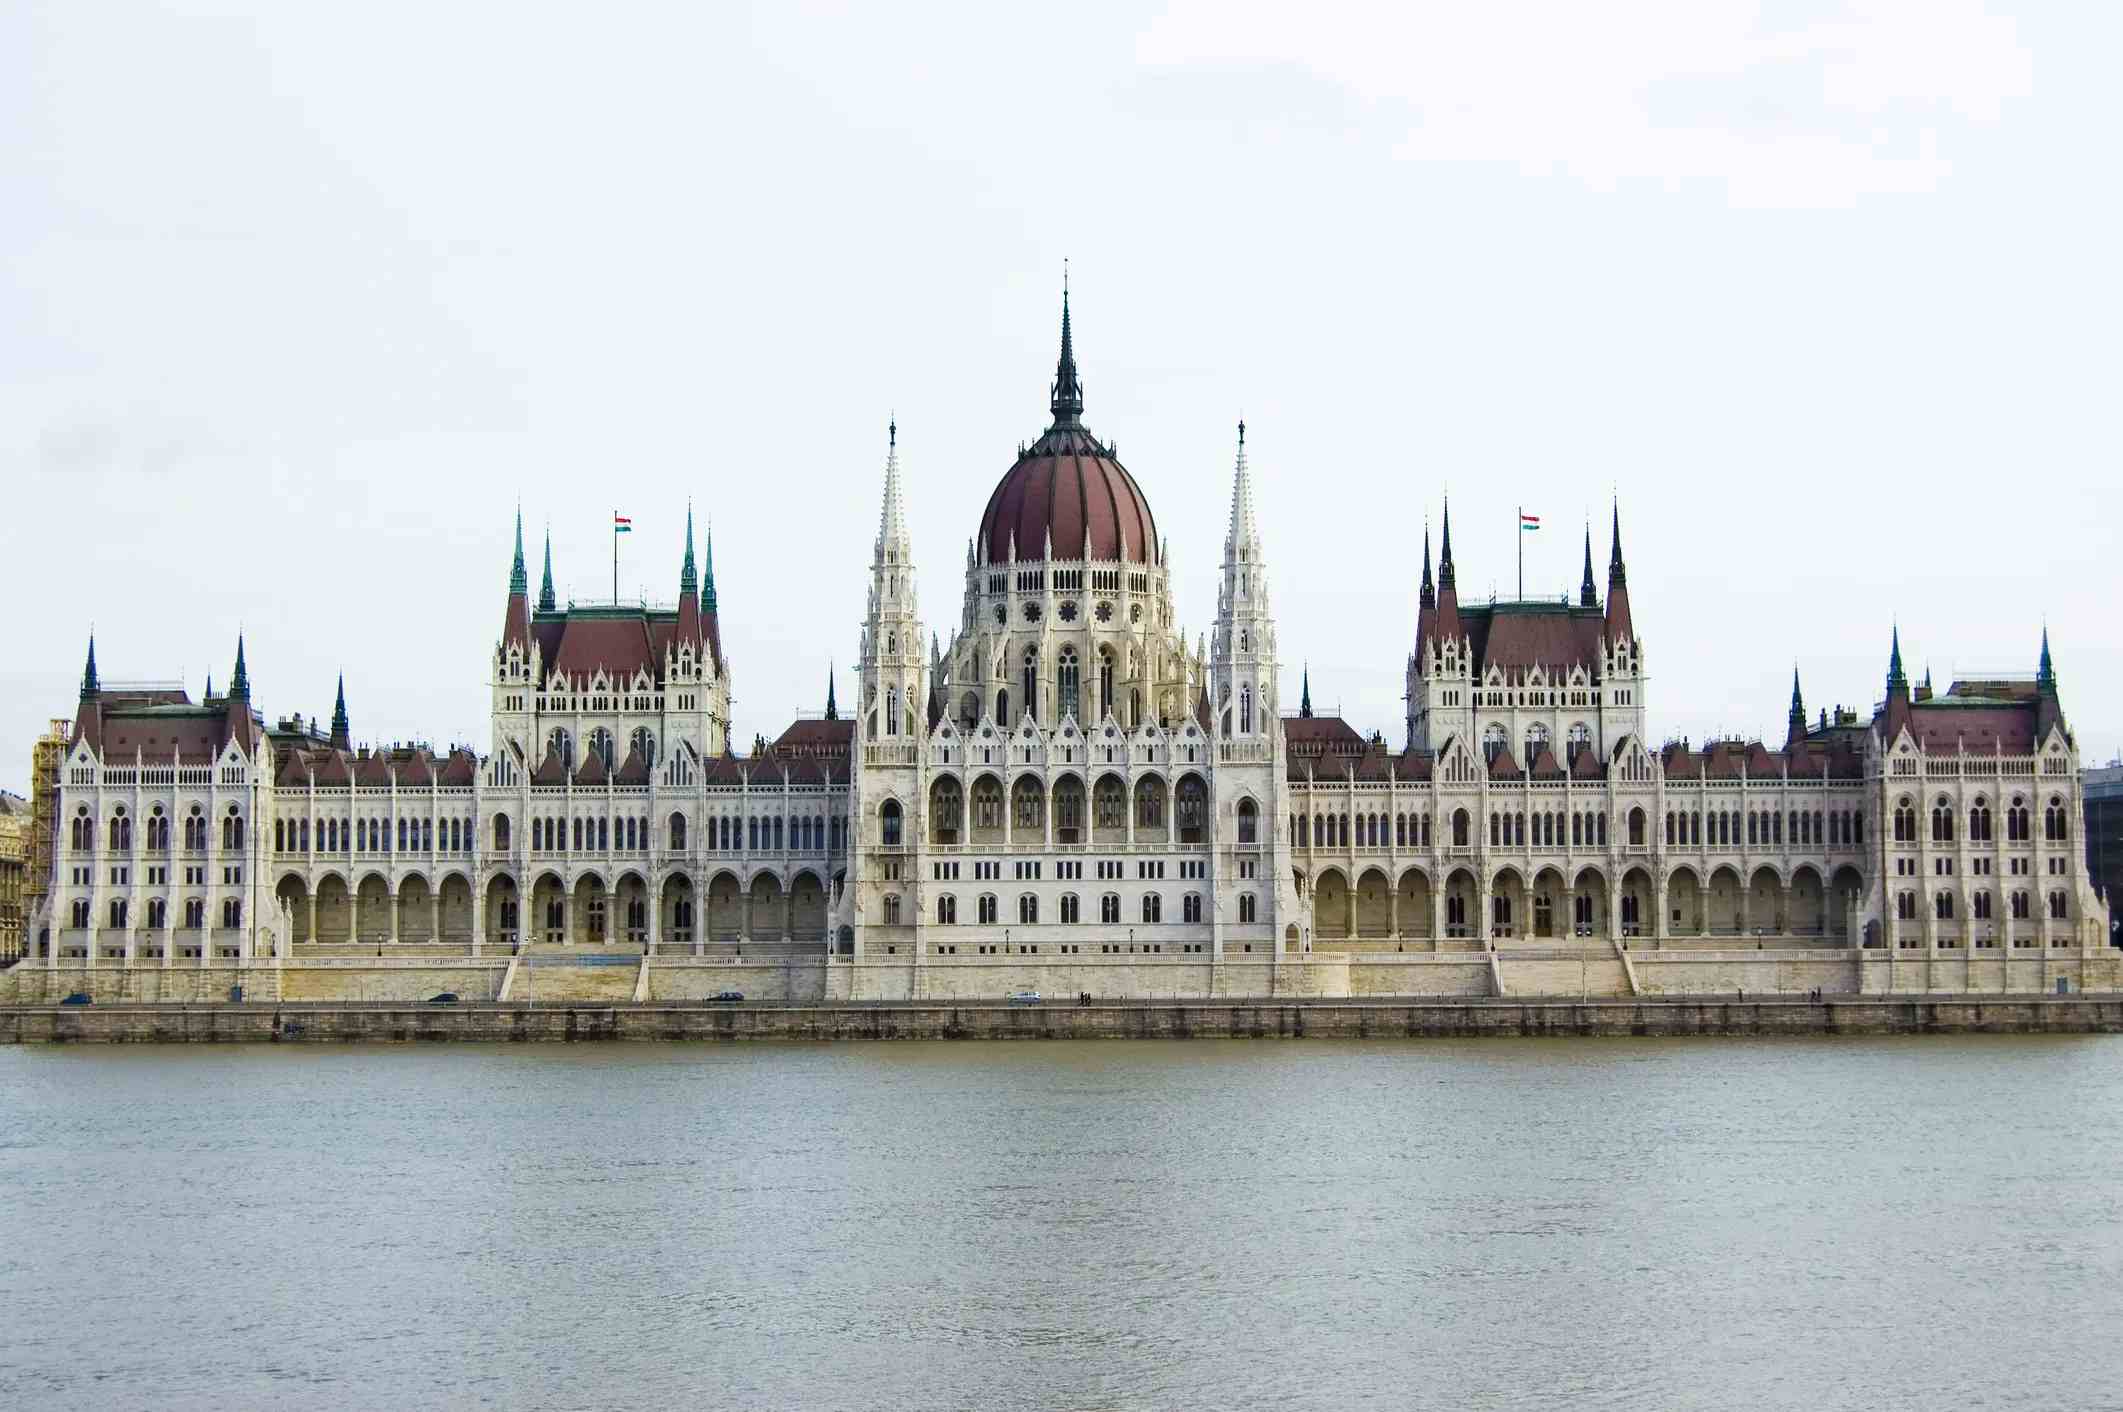 parlamento image